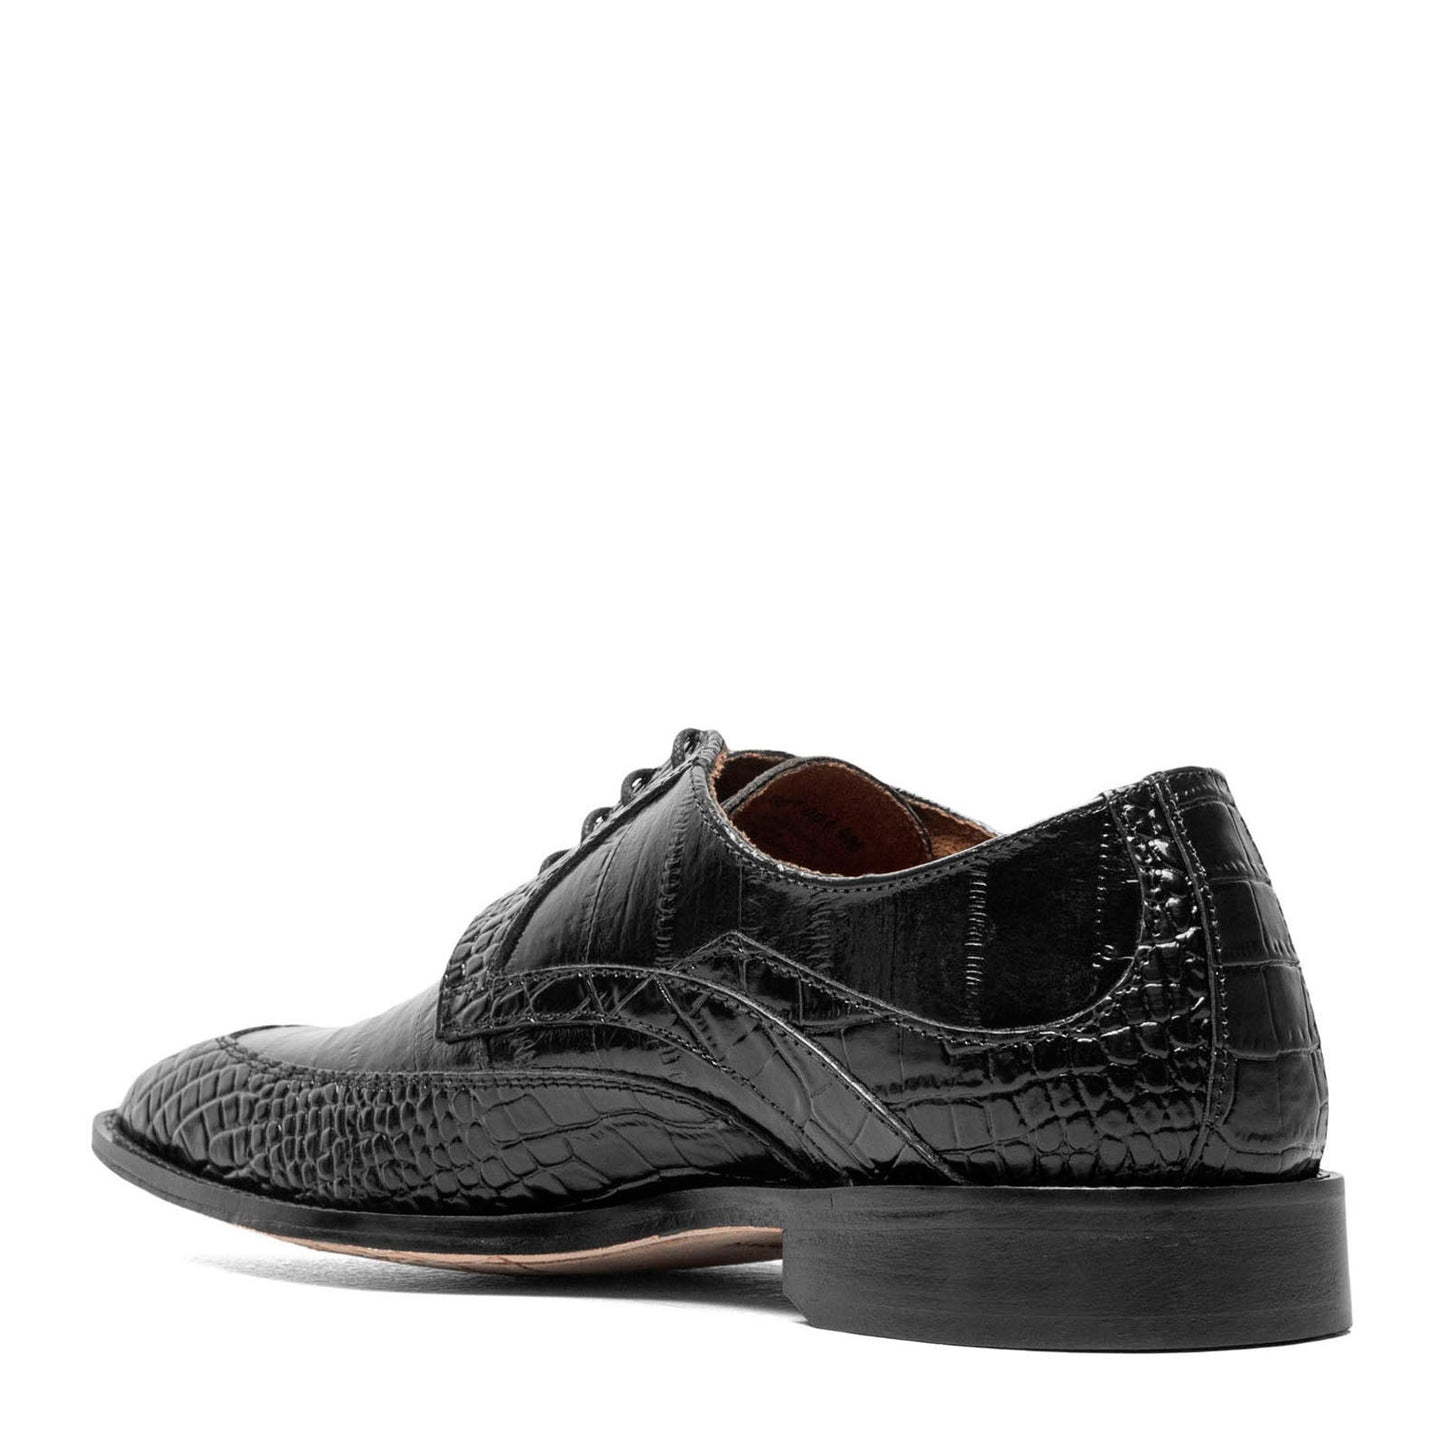 Peltz Shoes  Men's Stacy Adams Trubiano Moc Toe Oxford black 25631-001